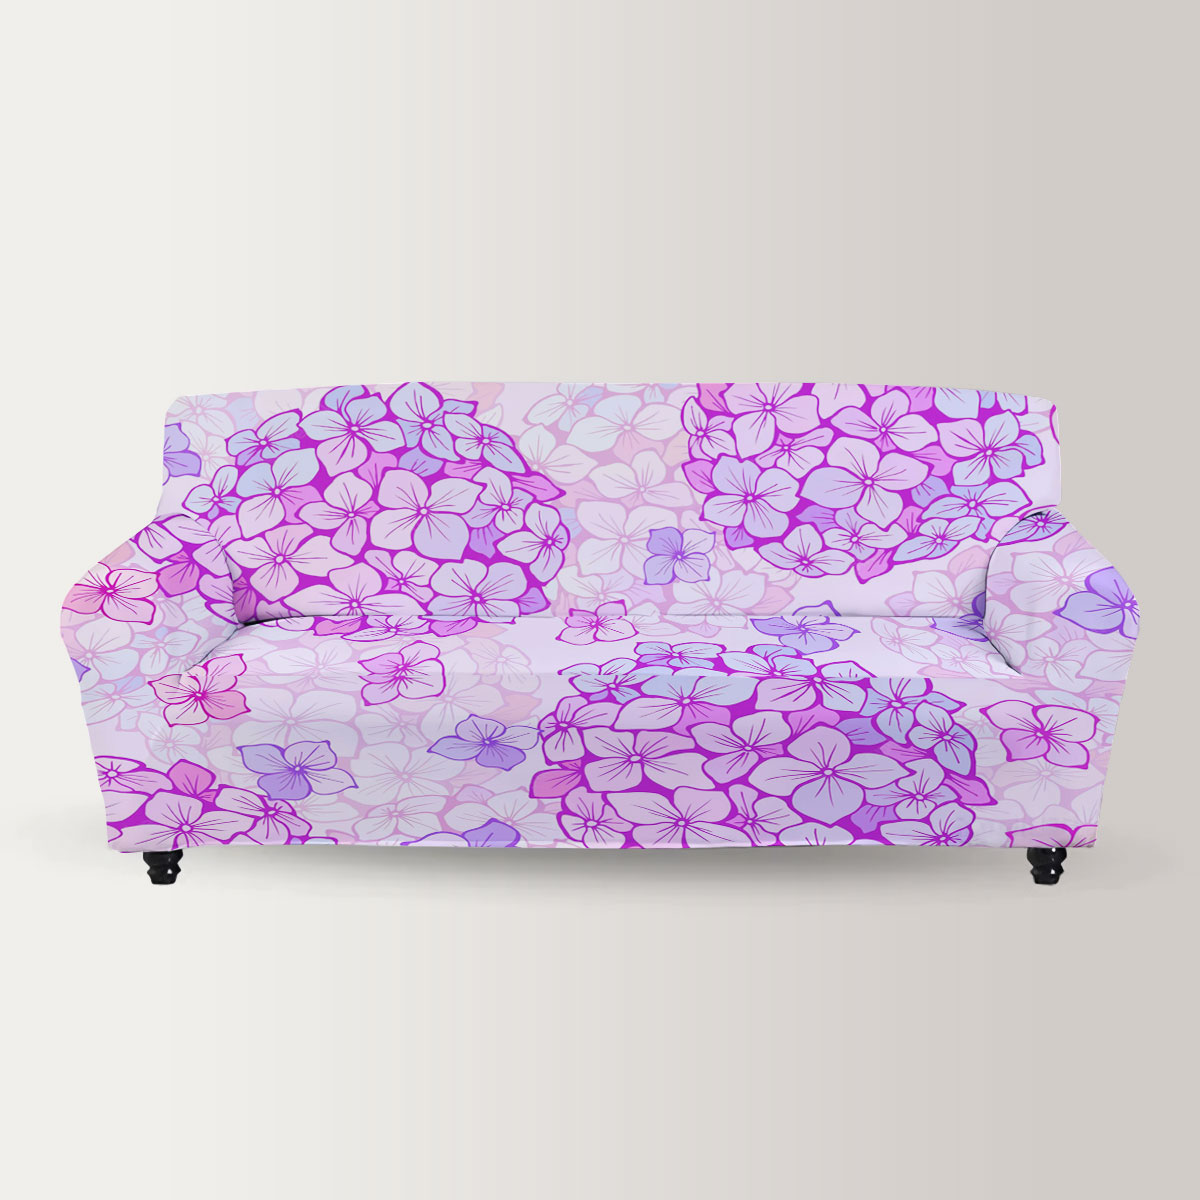 Pastel Hydrangea Flowers Sofa Cover